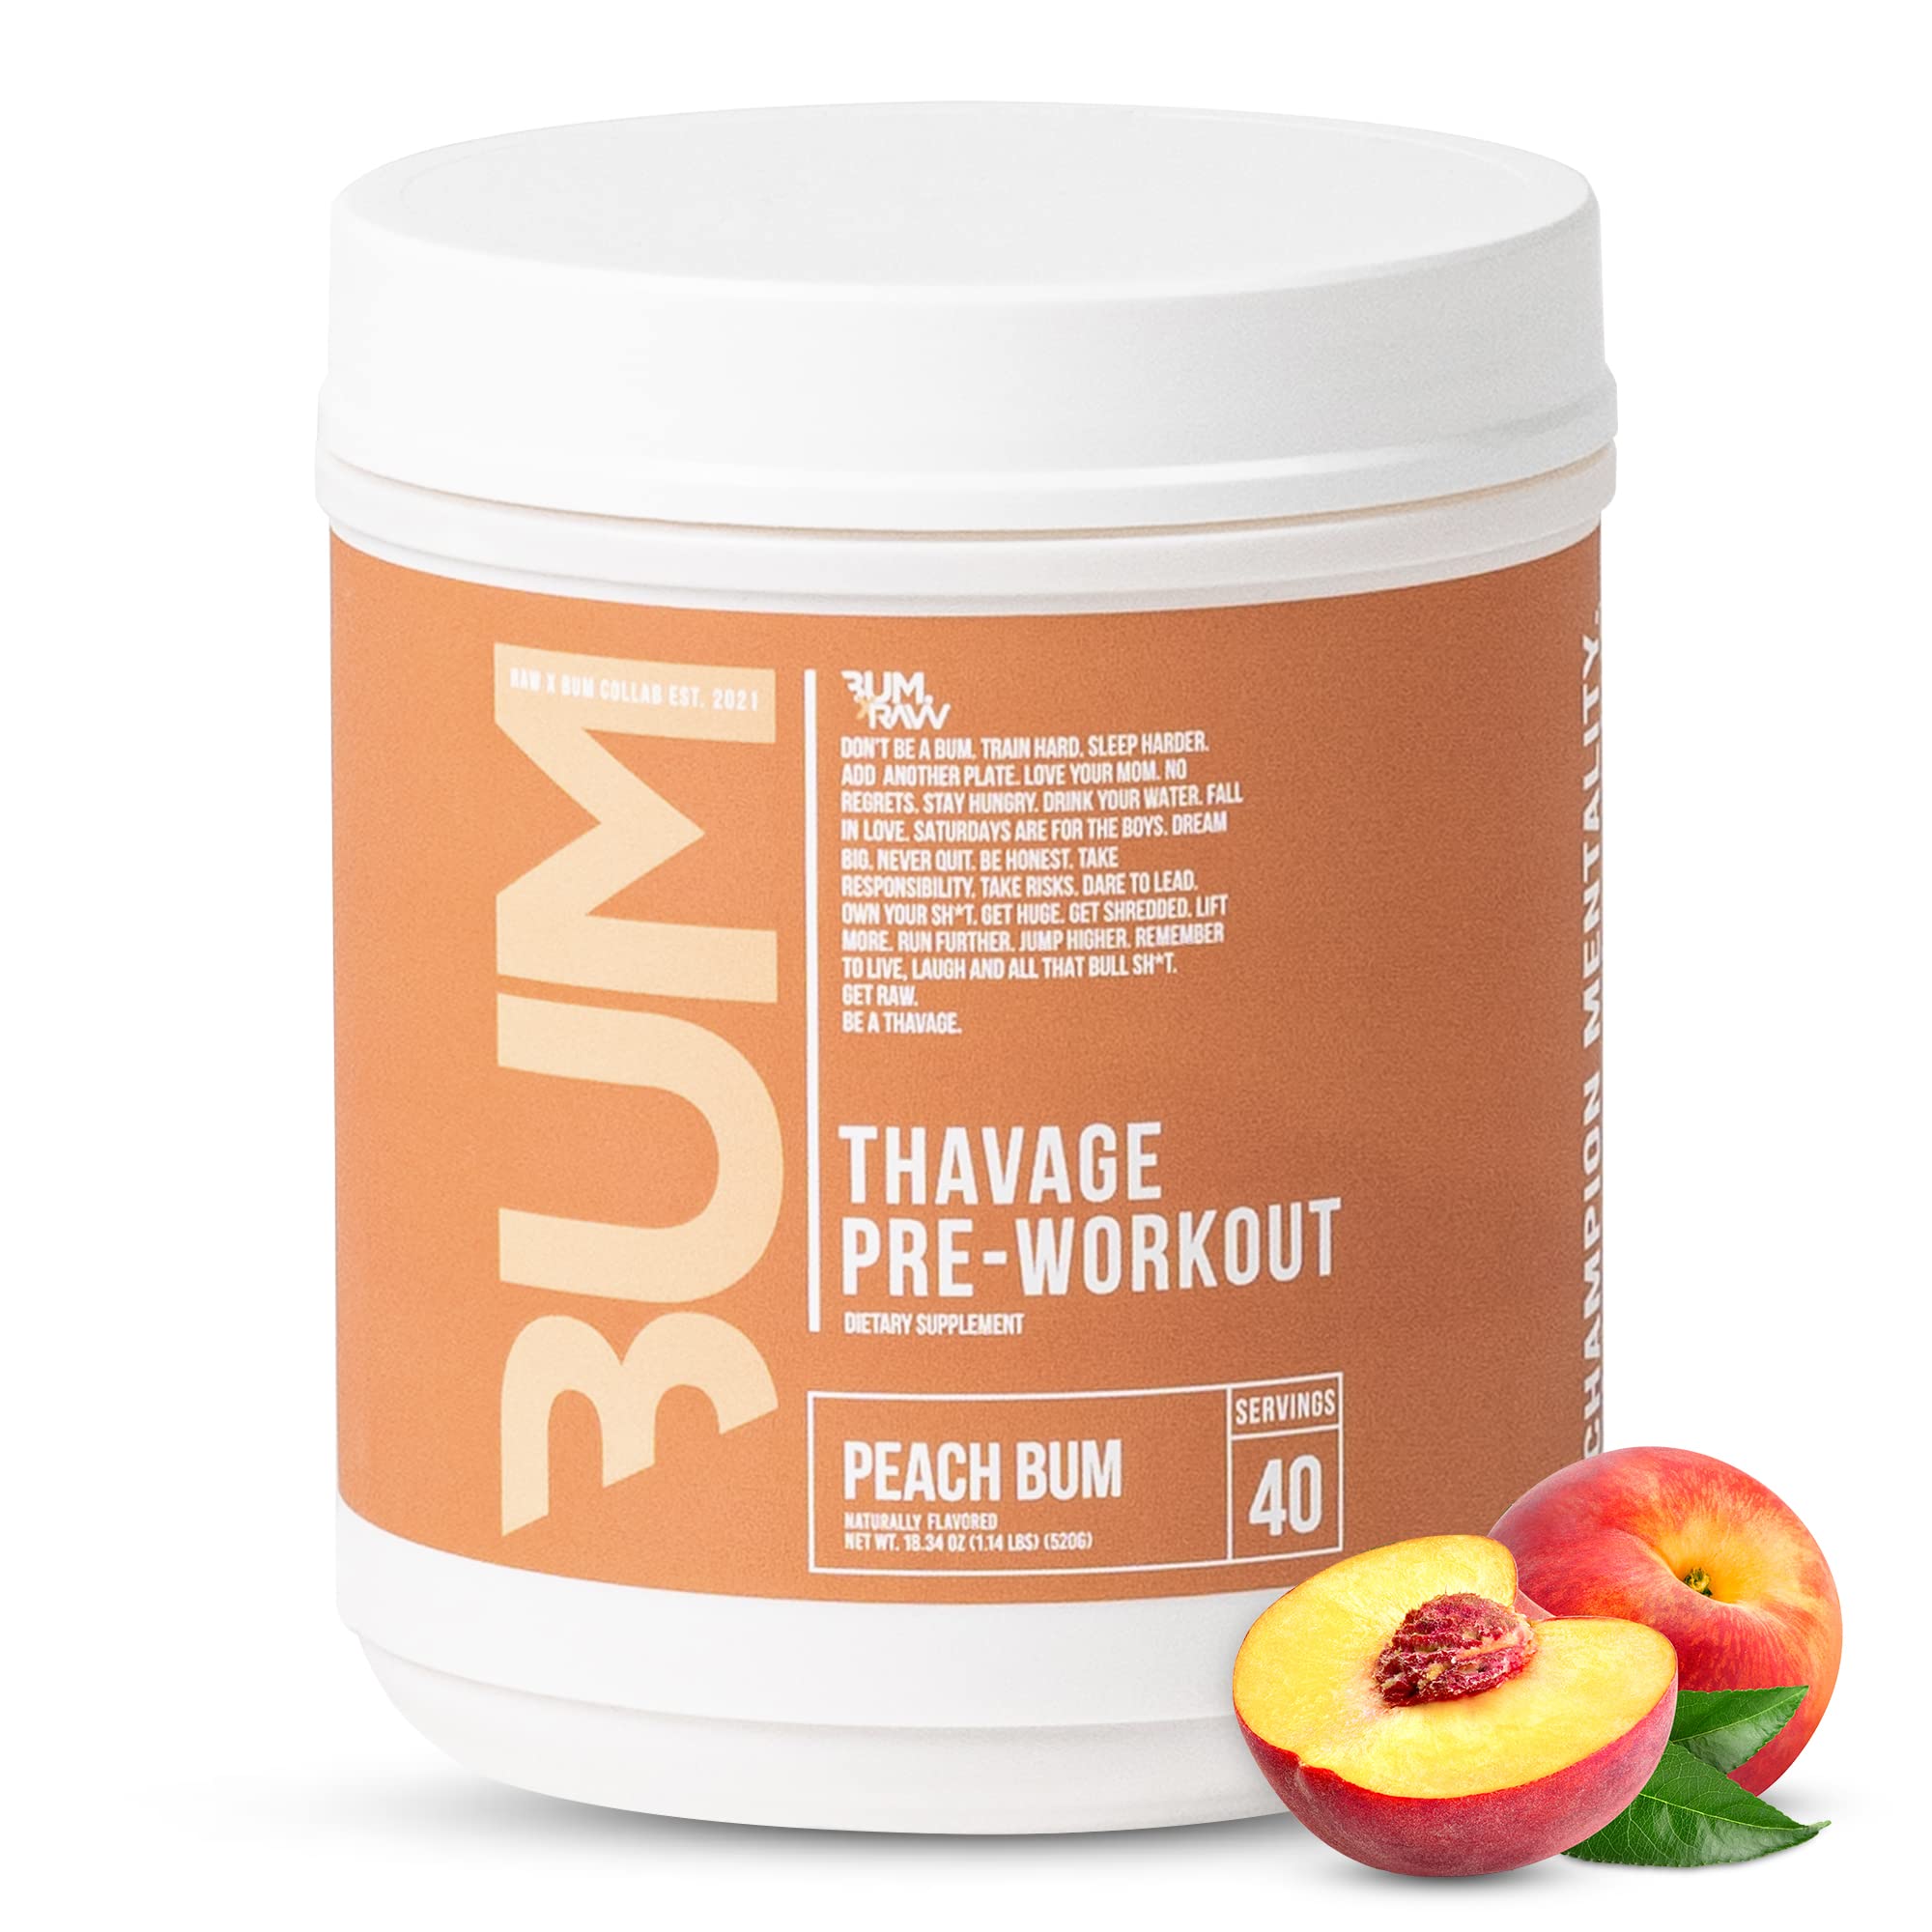 Raw Nutrition CBUM Series Thavage Pre-Workout - Peach Bum - www